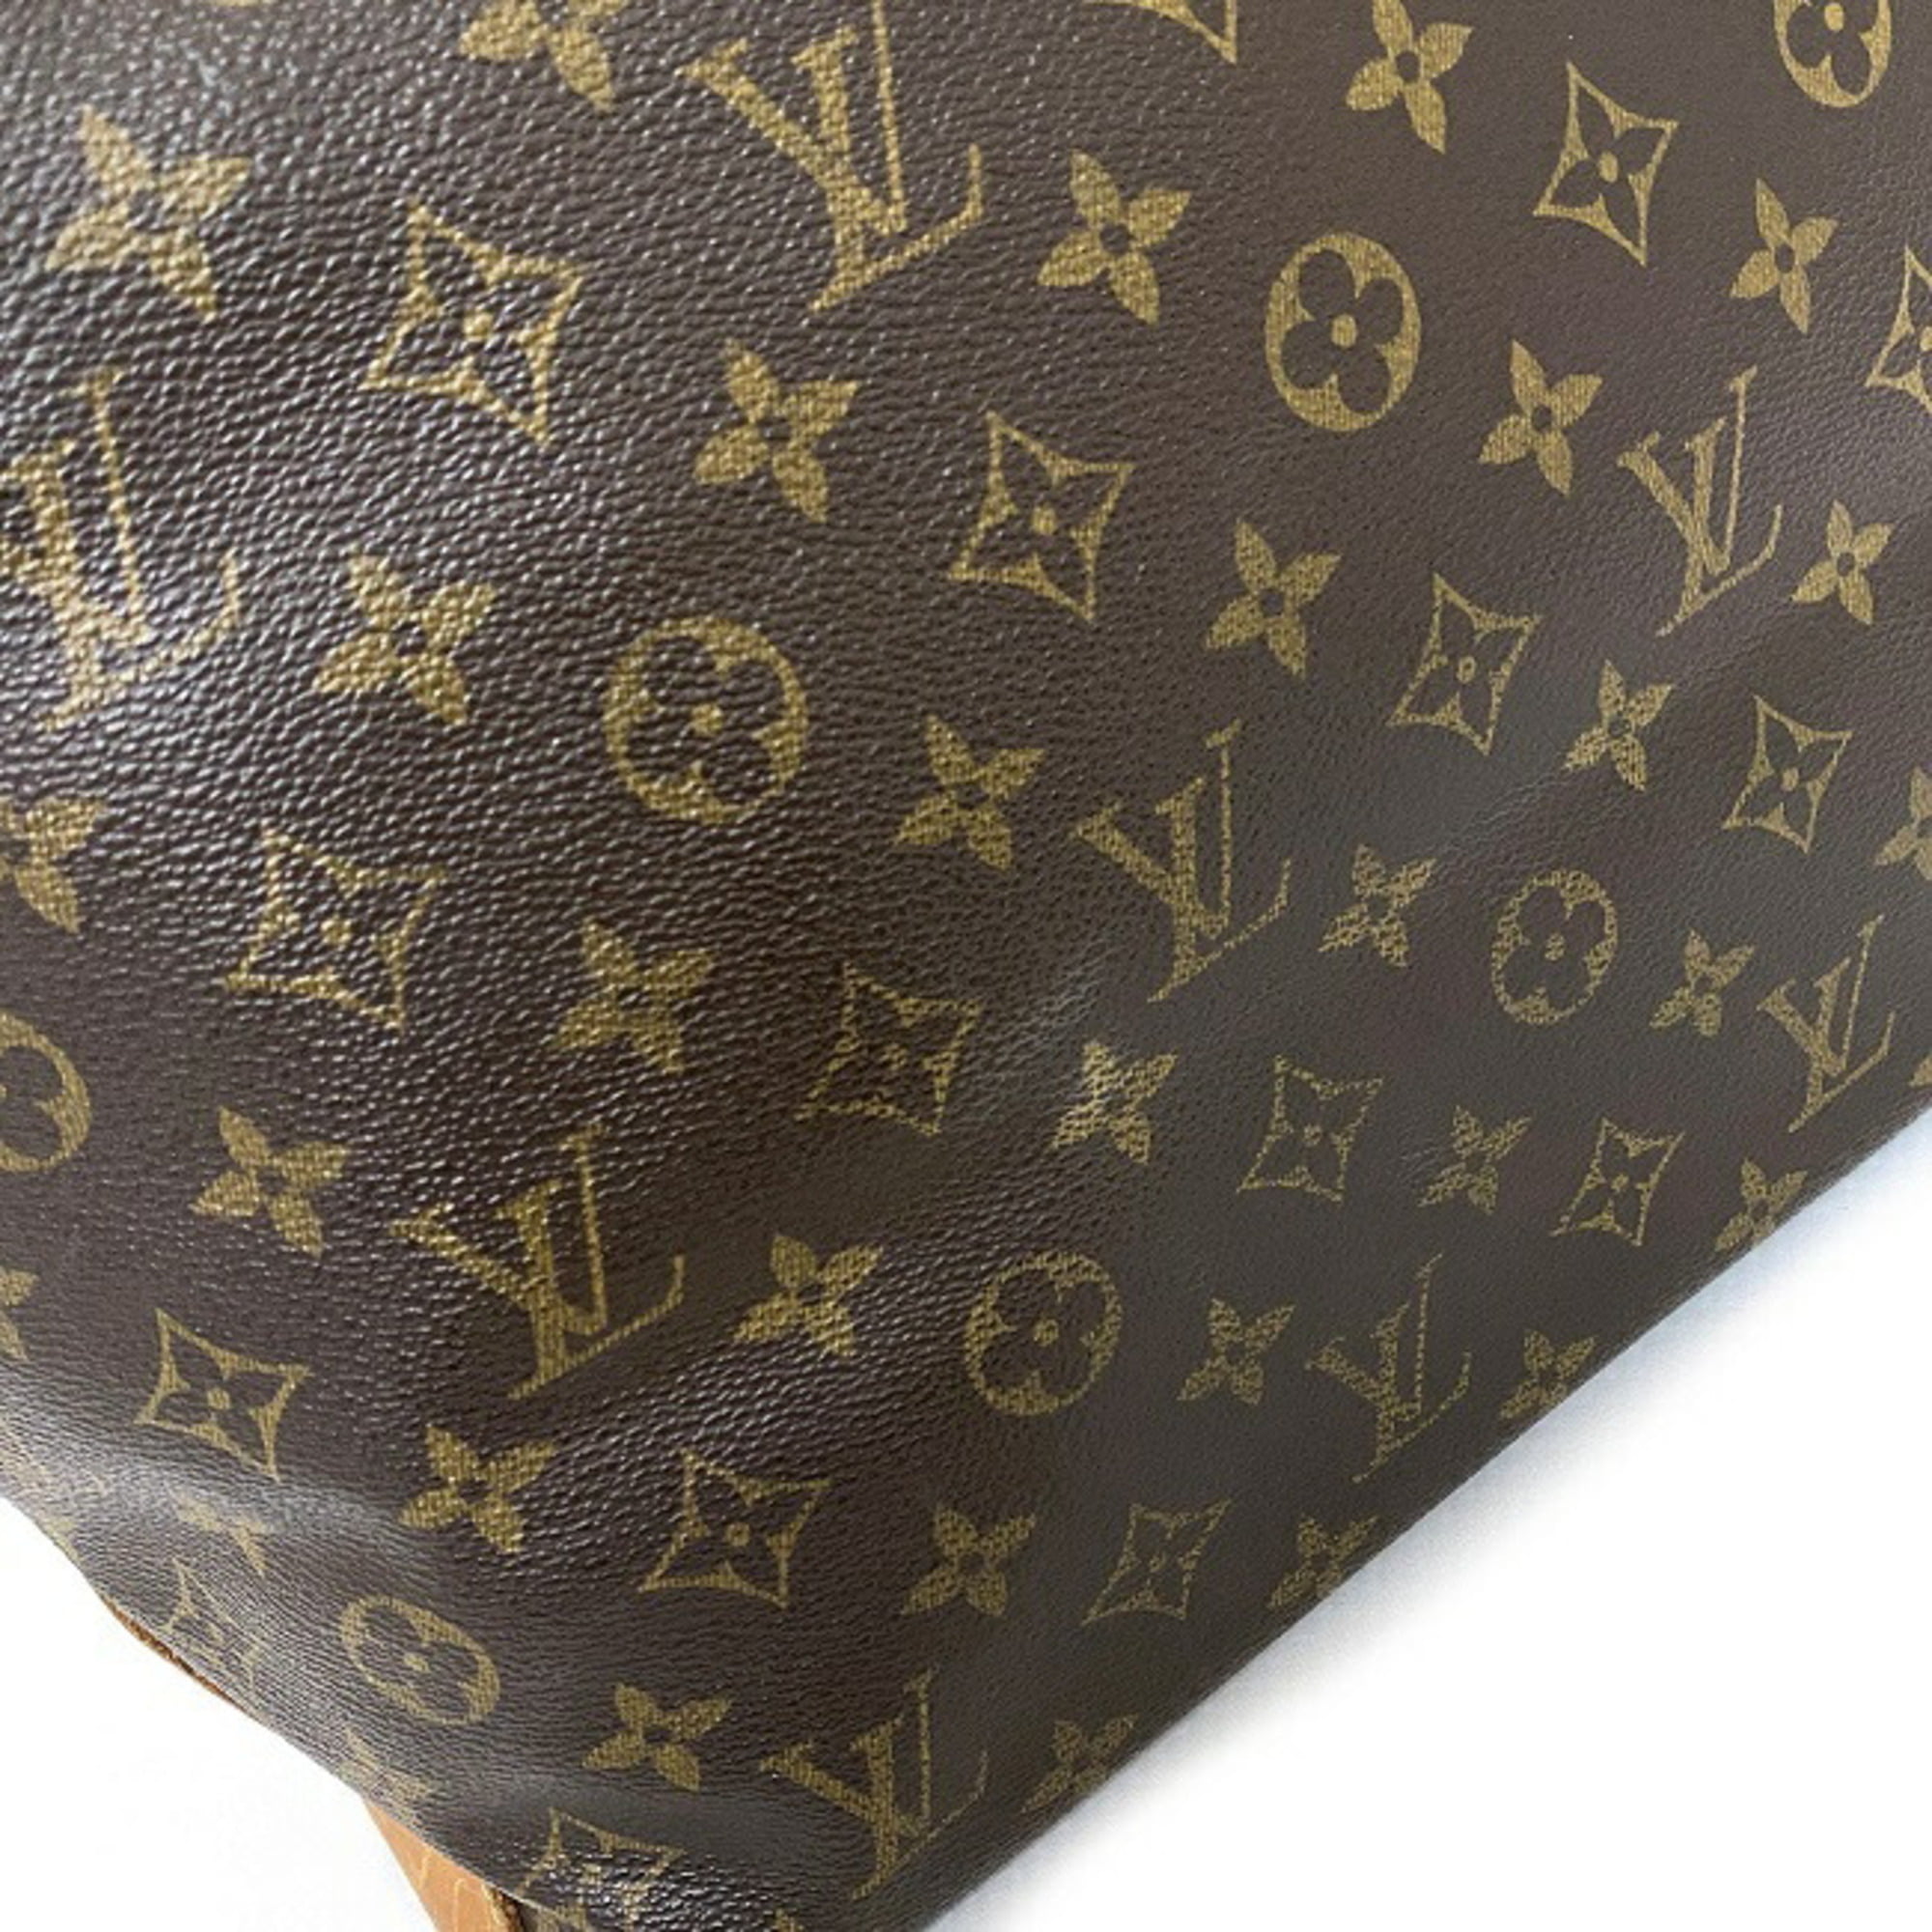 Authenticated Used Louis Vuitton Tote Bag Kabamezo Brown Monogram M51151  Canvas Nume AR0024 LOUIS VUITTON Women's 